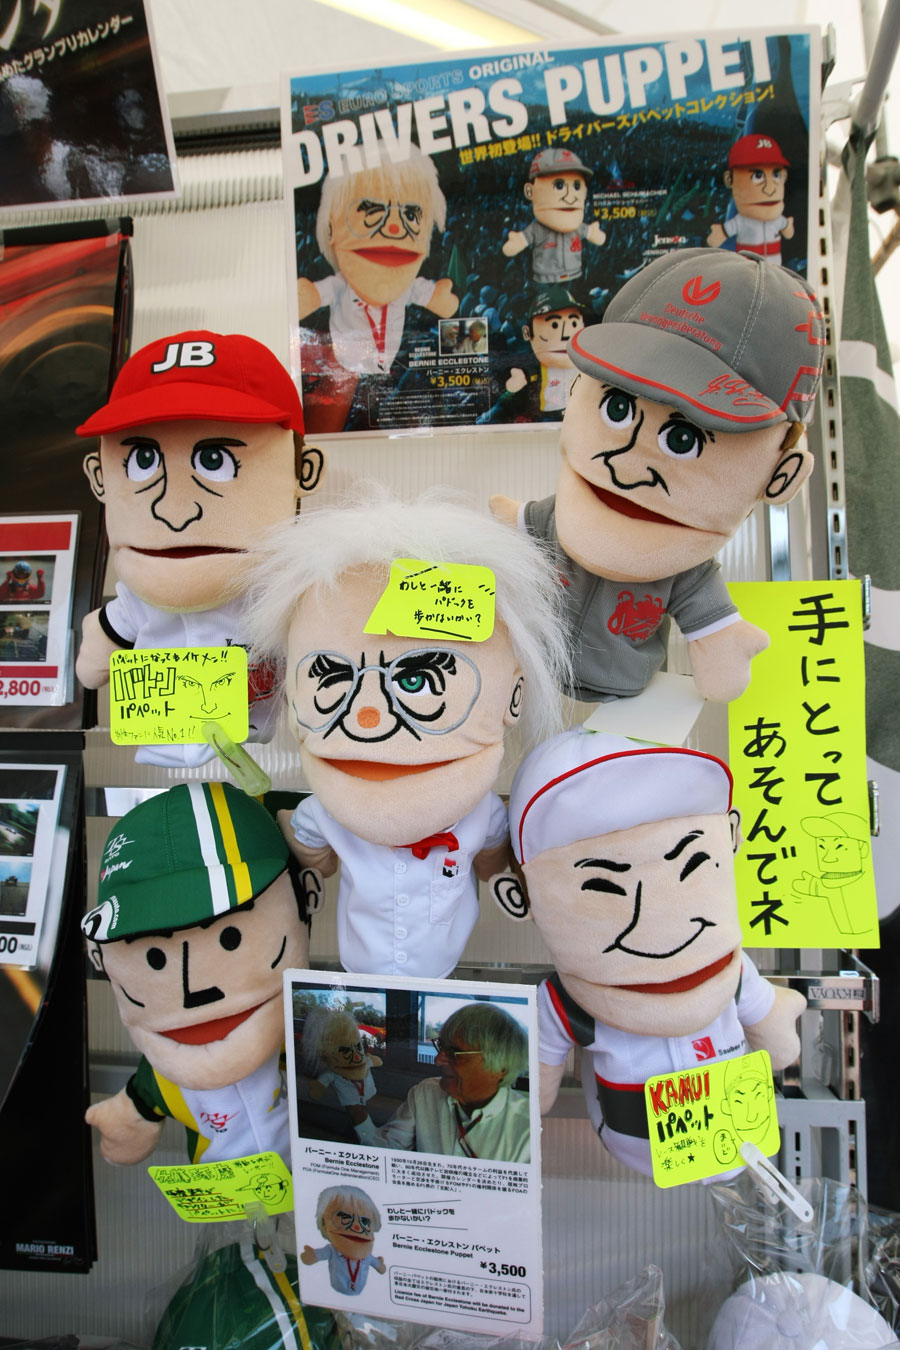 Bernie Ecclestone, Jenson Button, Michael Schumacher, Kamui Kobayashi and Takuma Sato hand puppets in the paddock